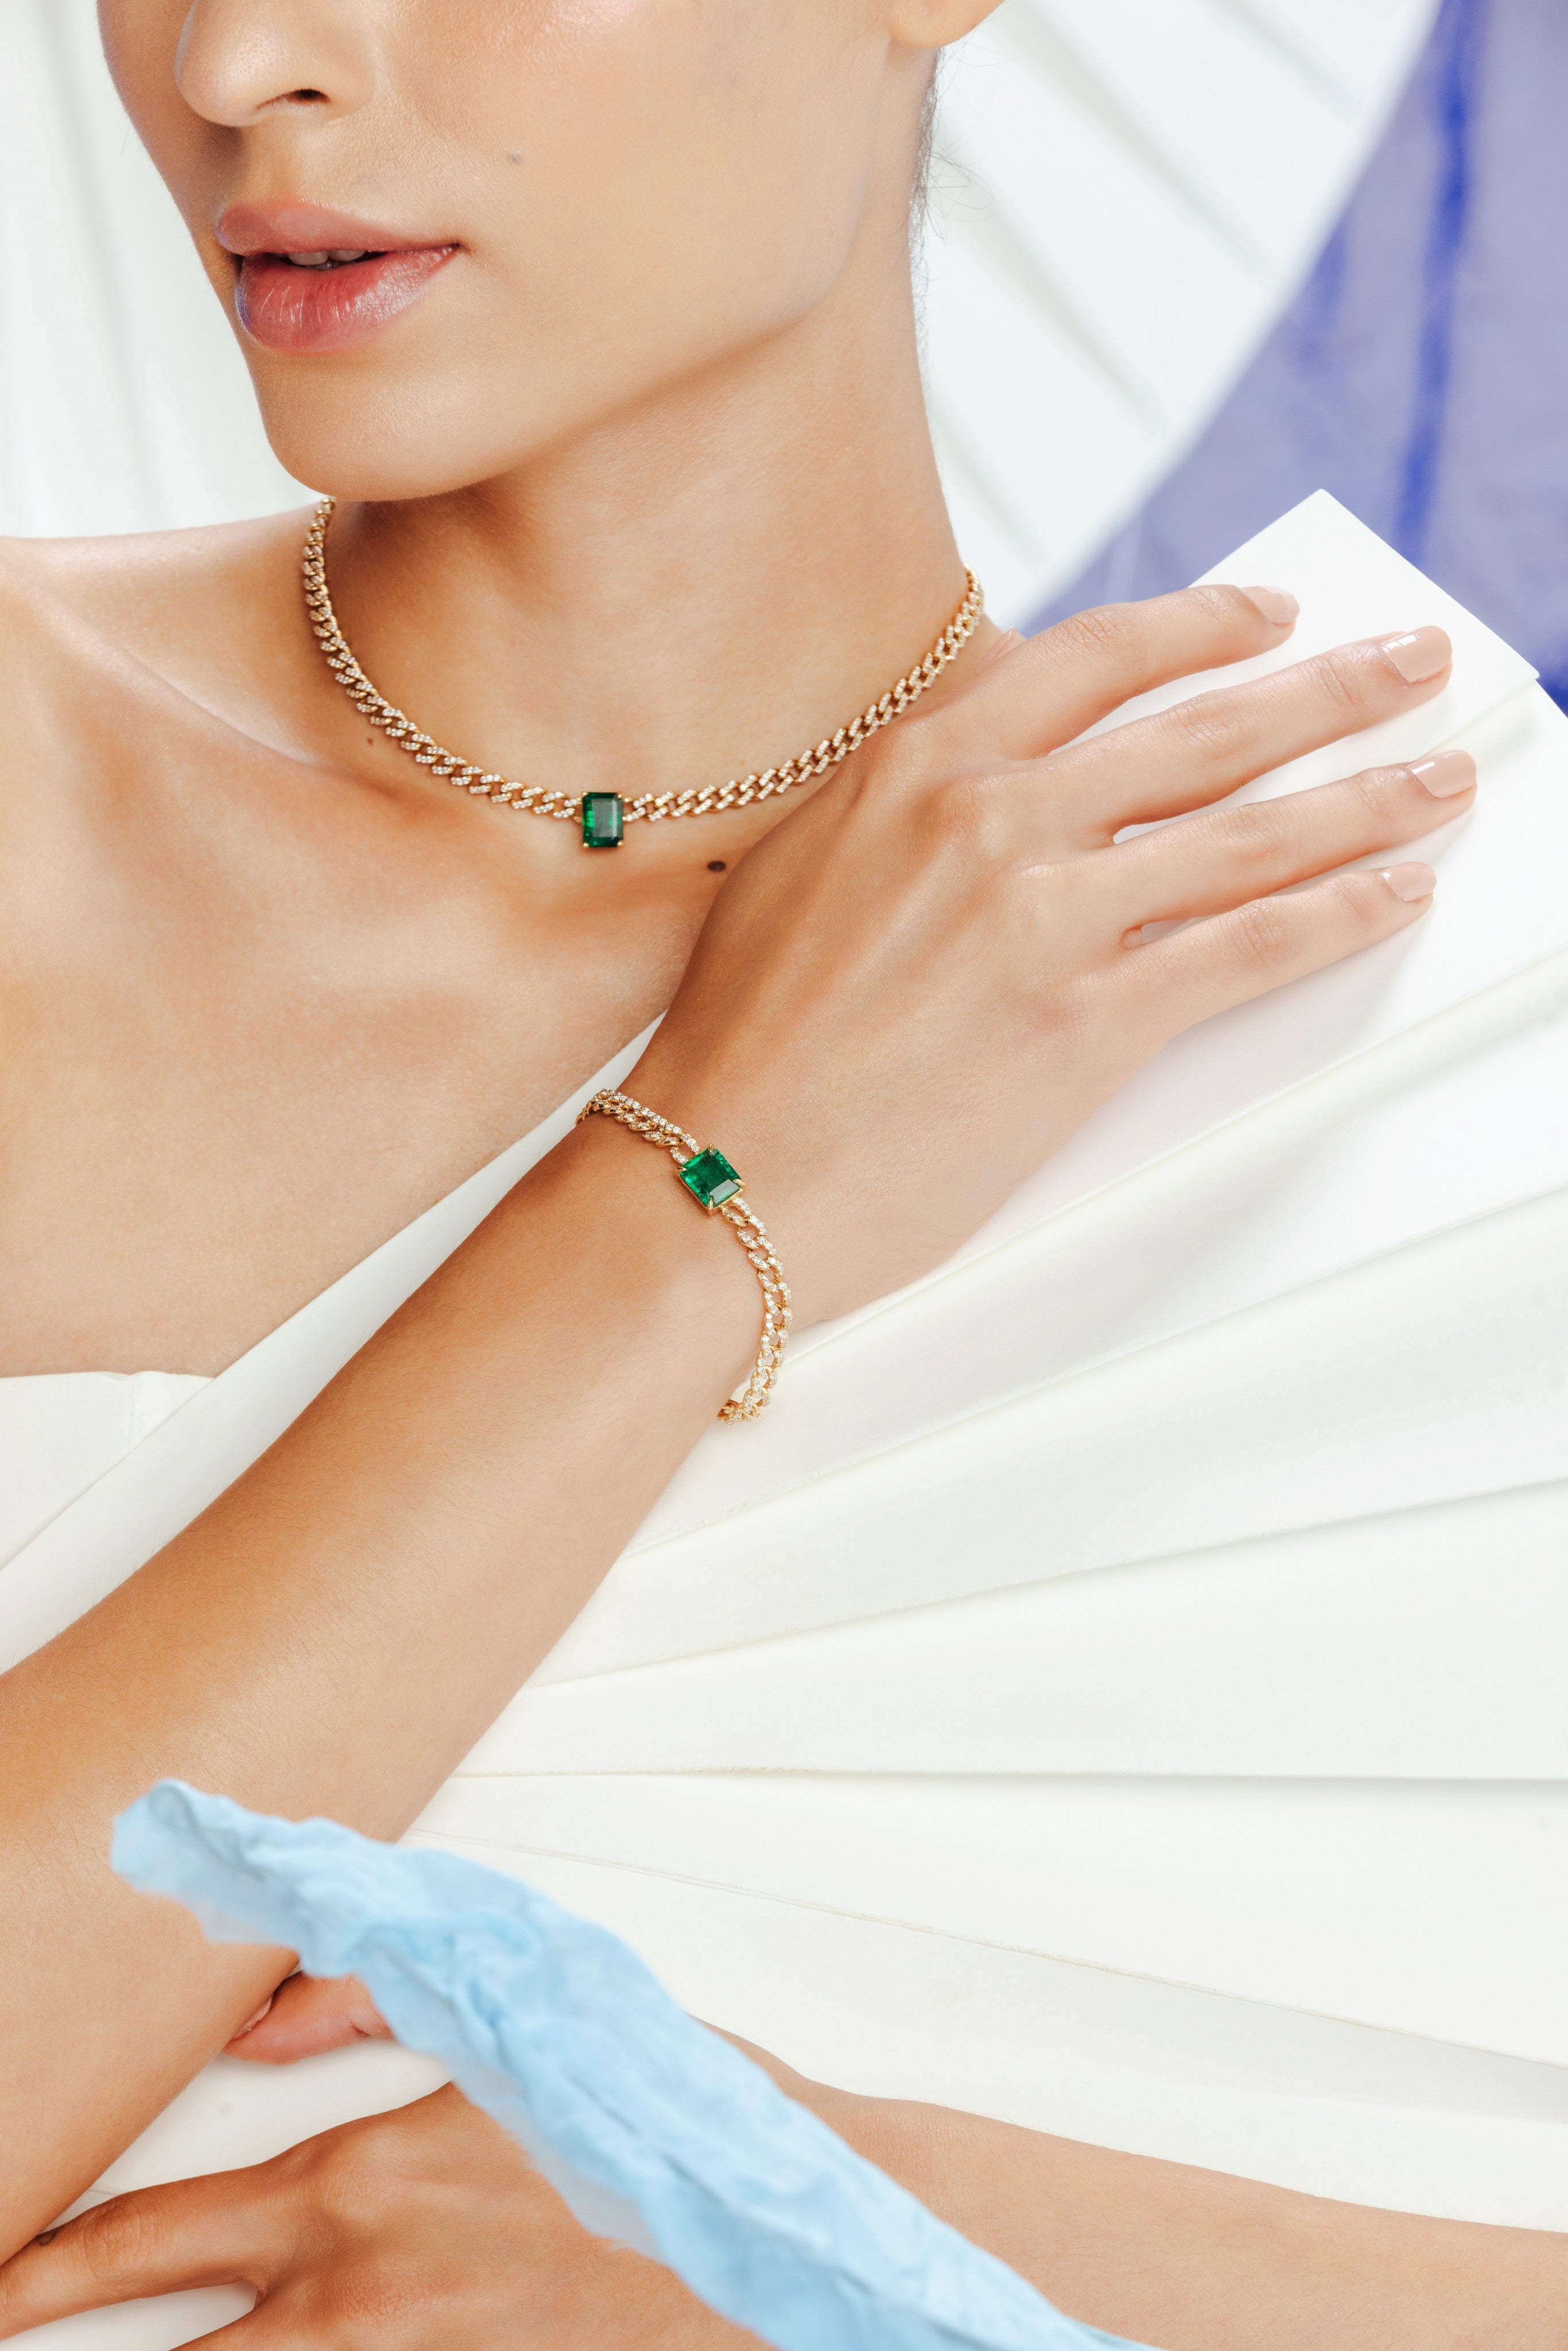 18K Gold Emerald & Diamond Curb Chain Bracelet